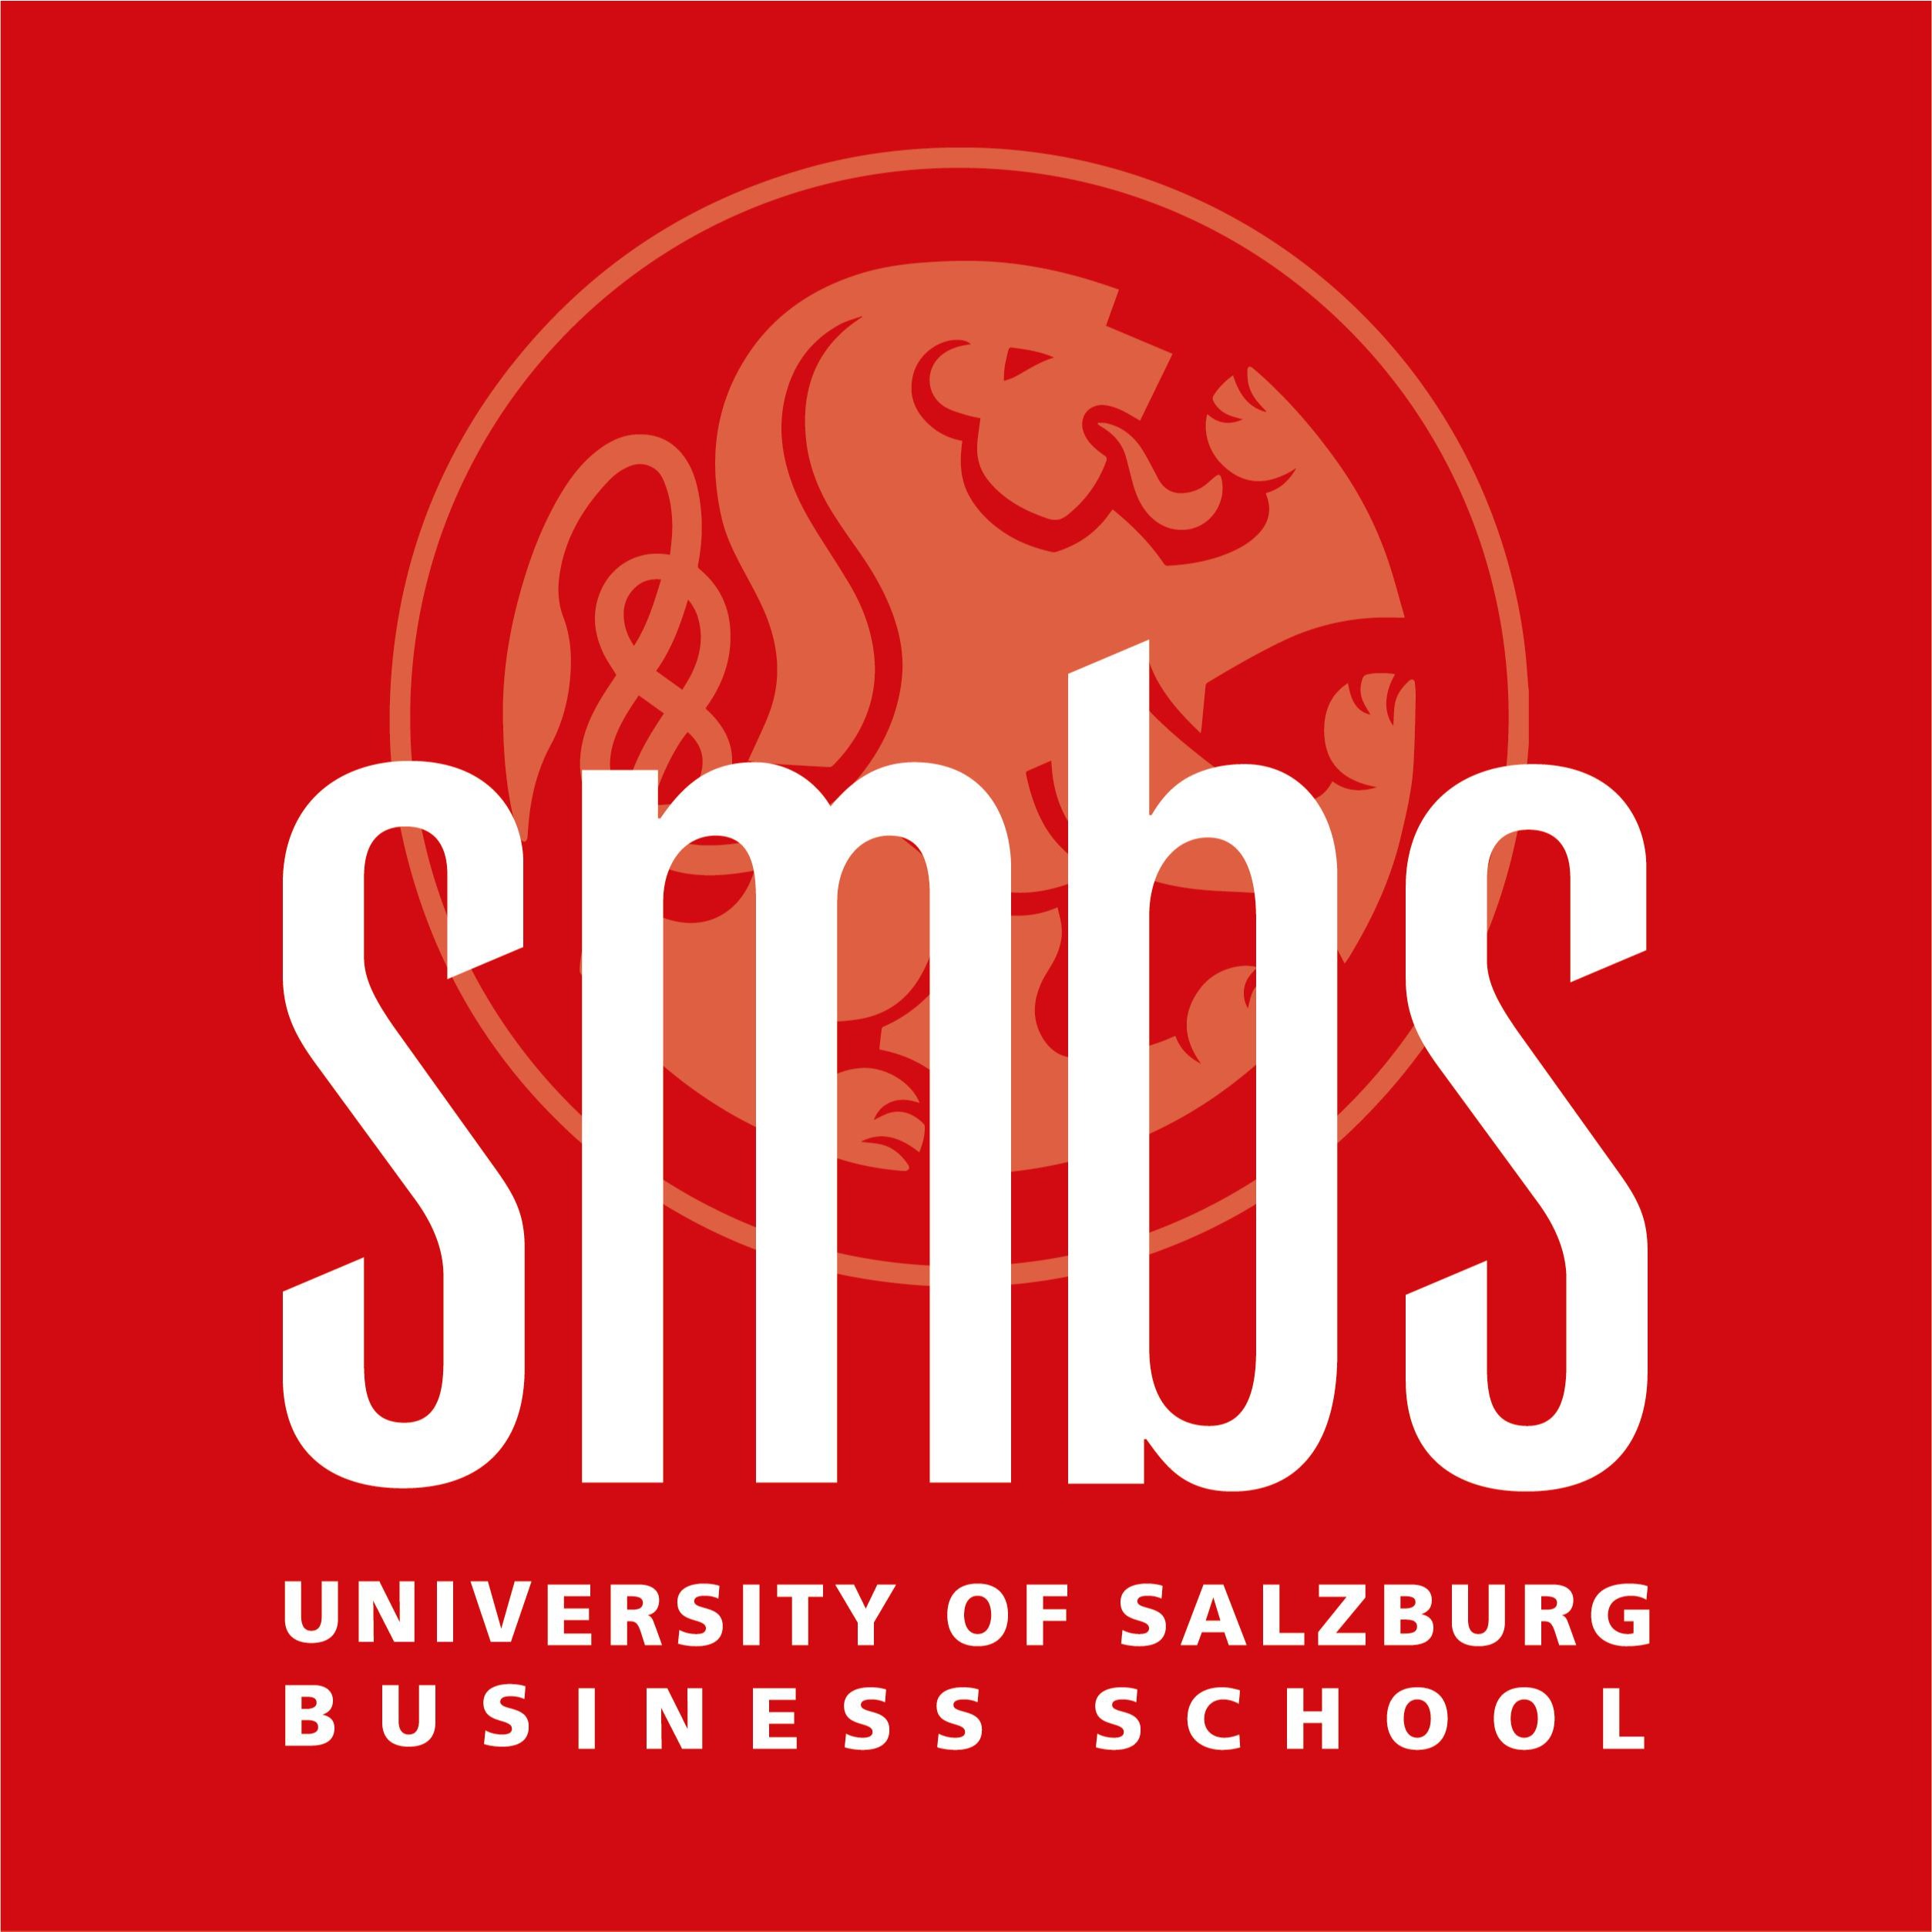 SMBS University of Salzburg Business School